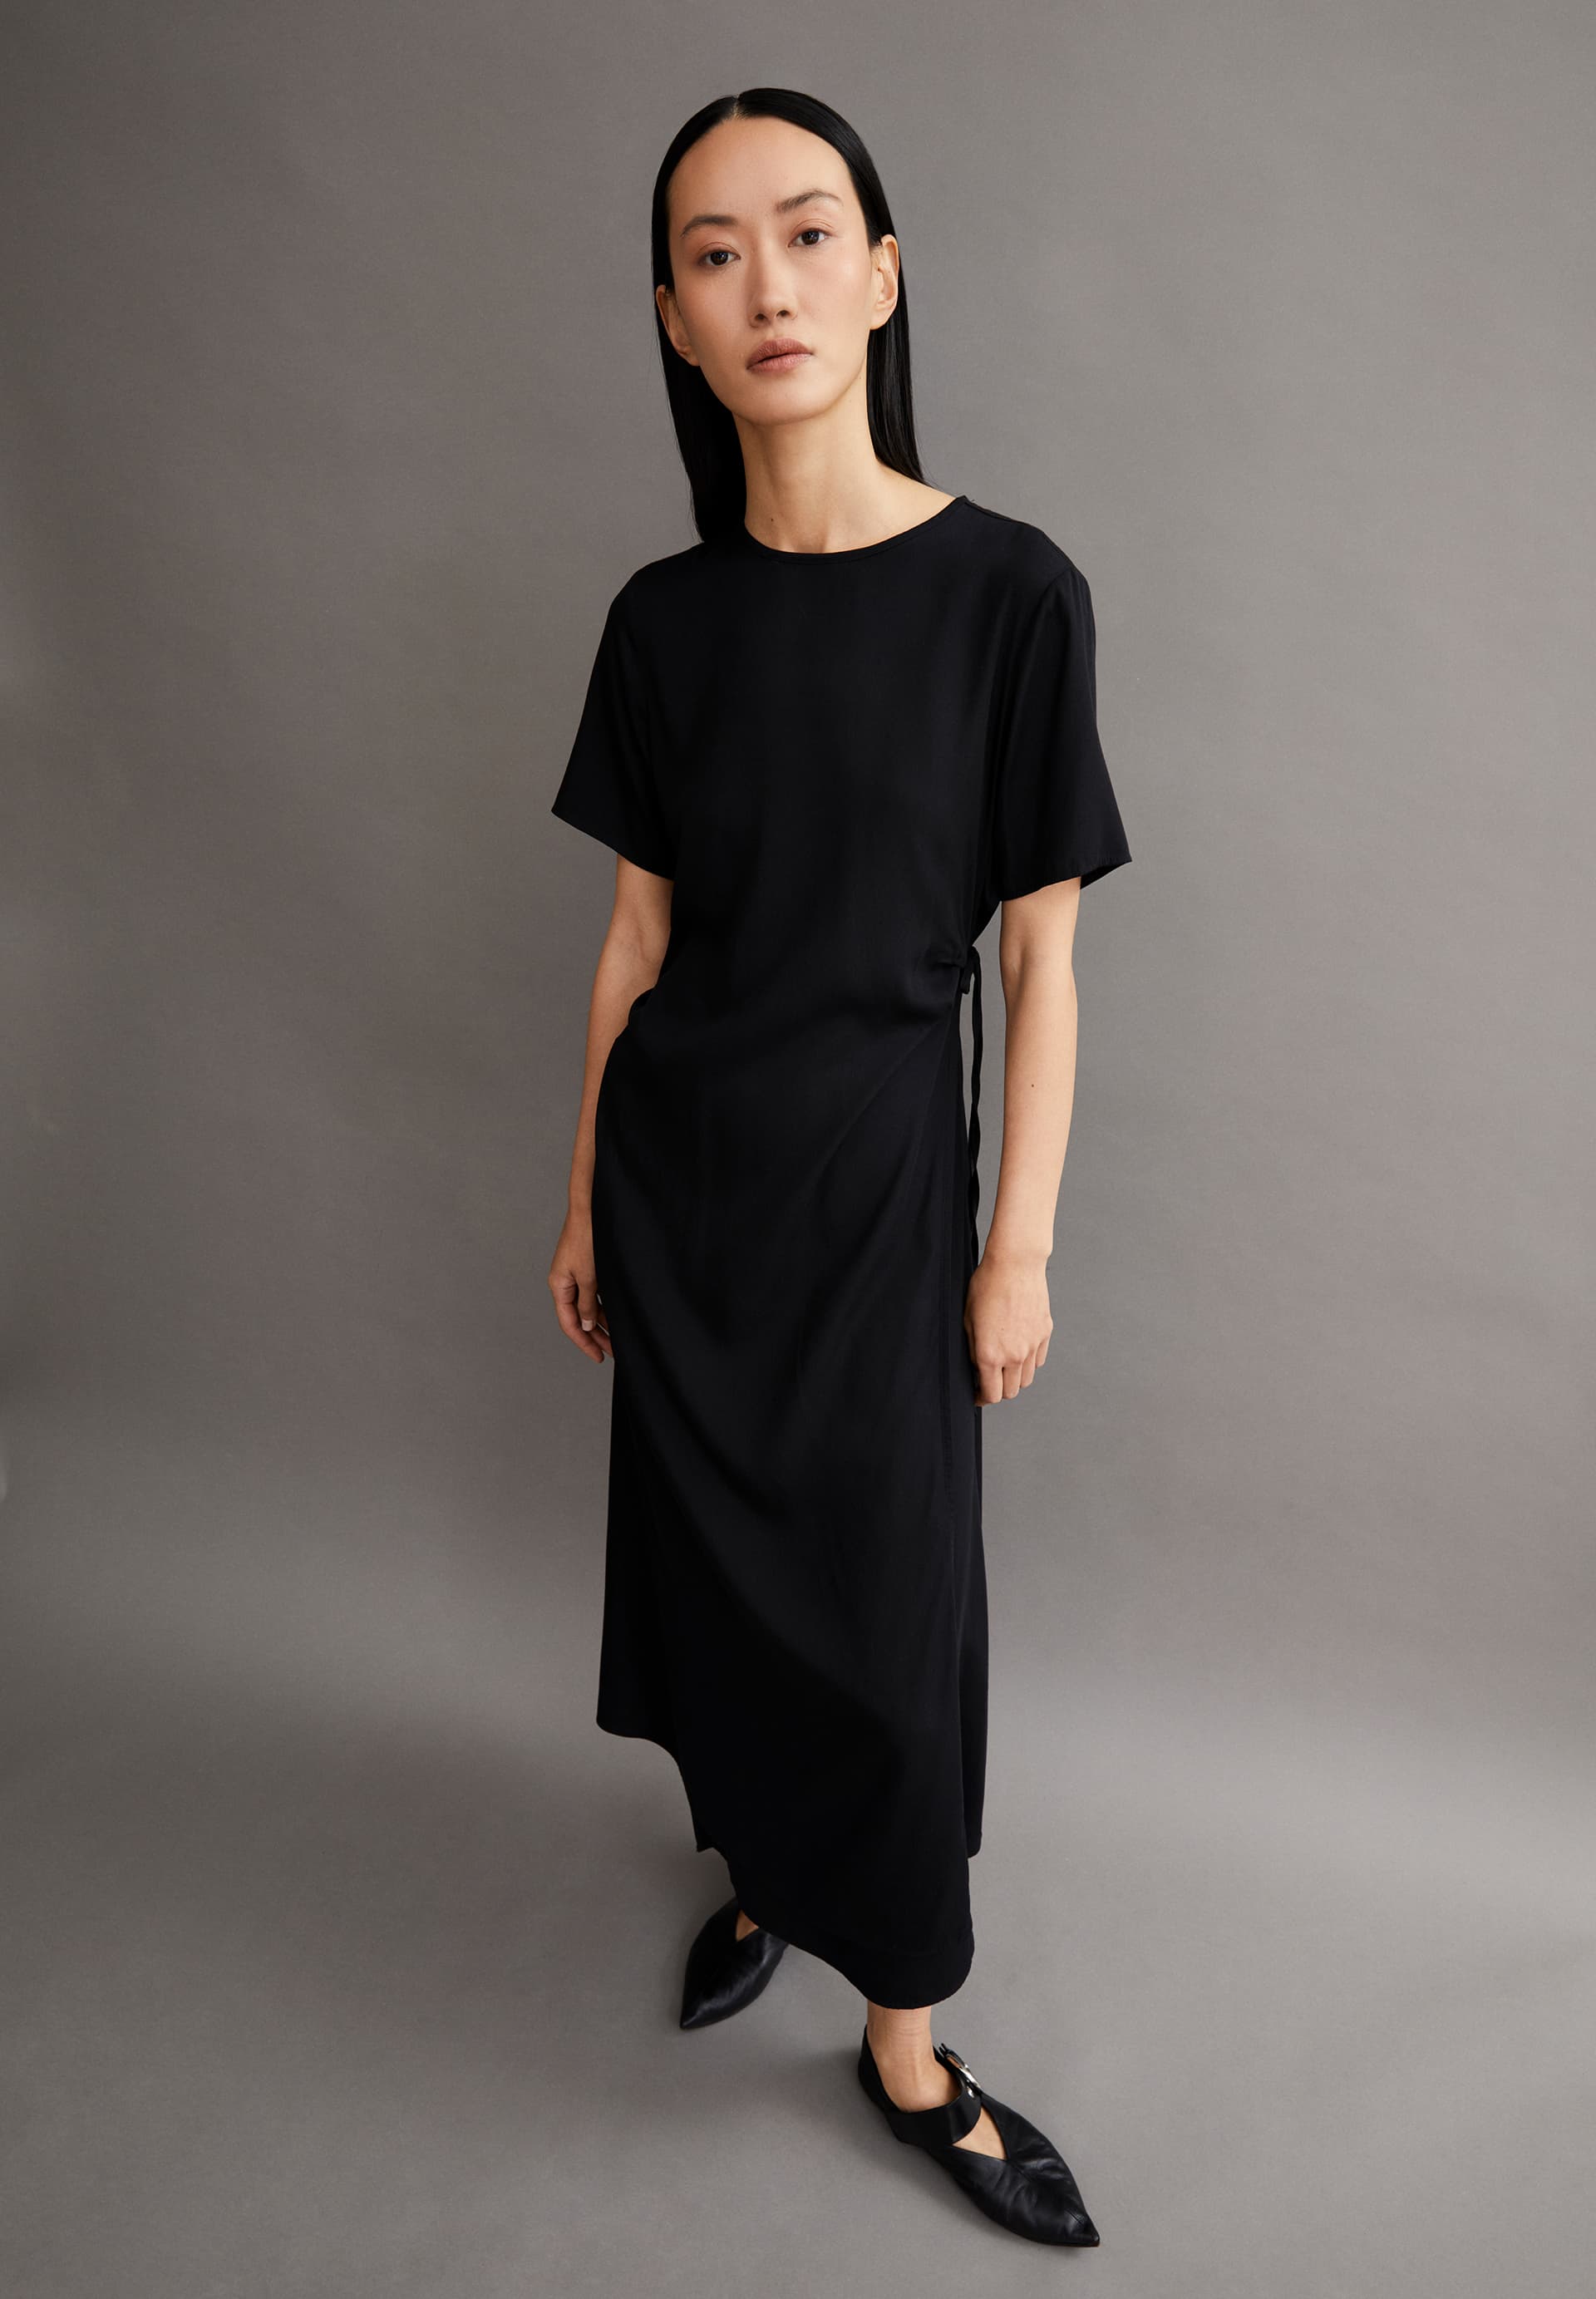 SEDISAA Woven Dress Regular Fit made of TENCEL™ Lyocell Mix